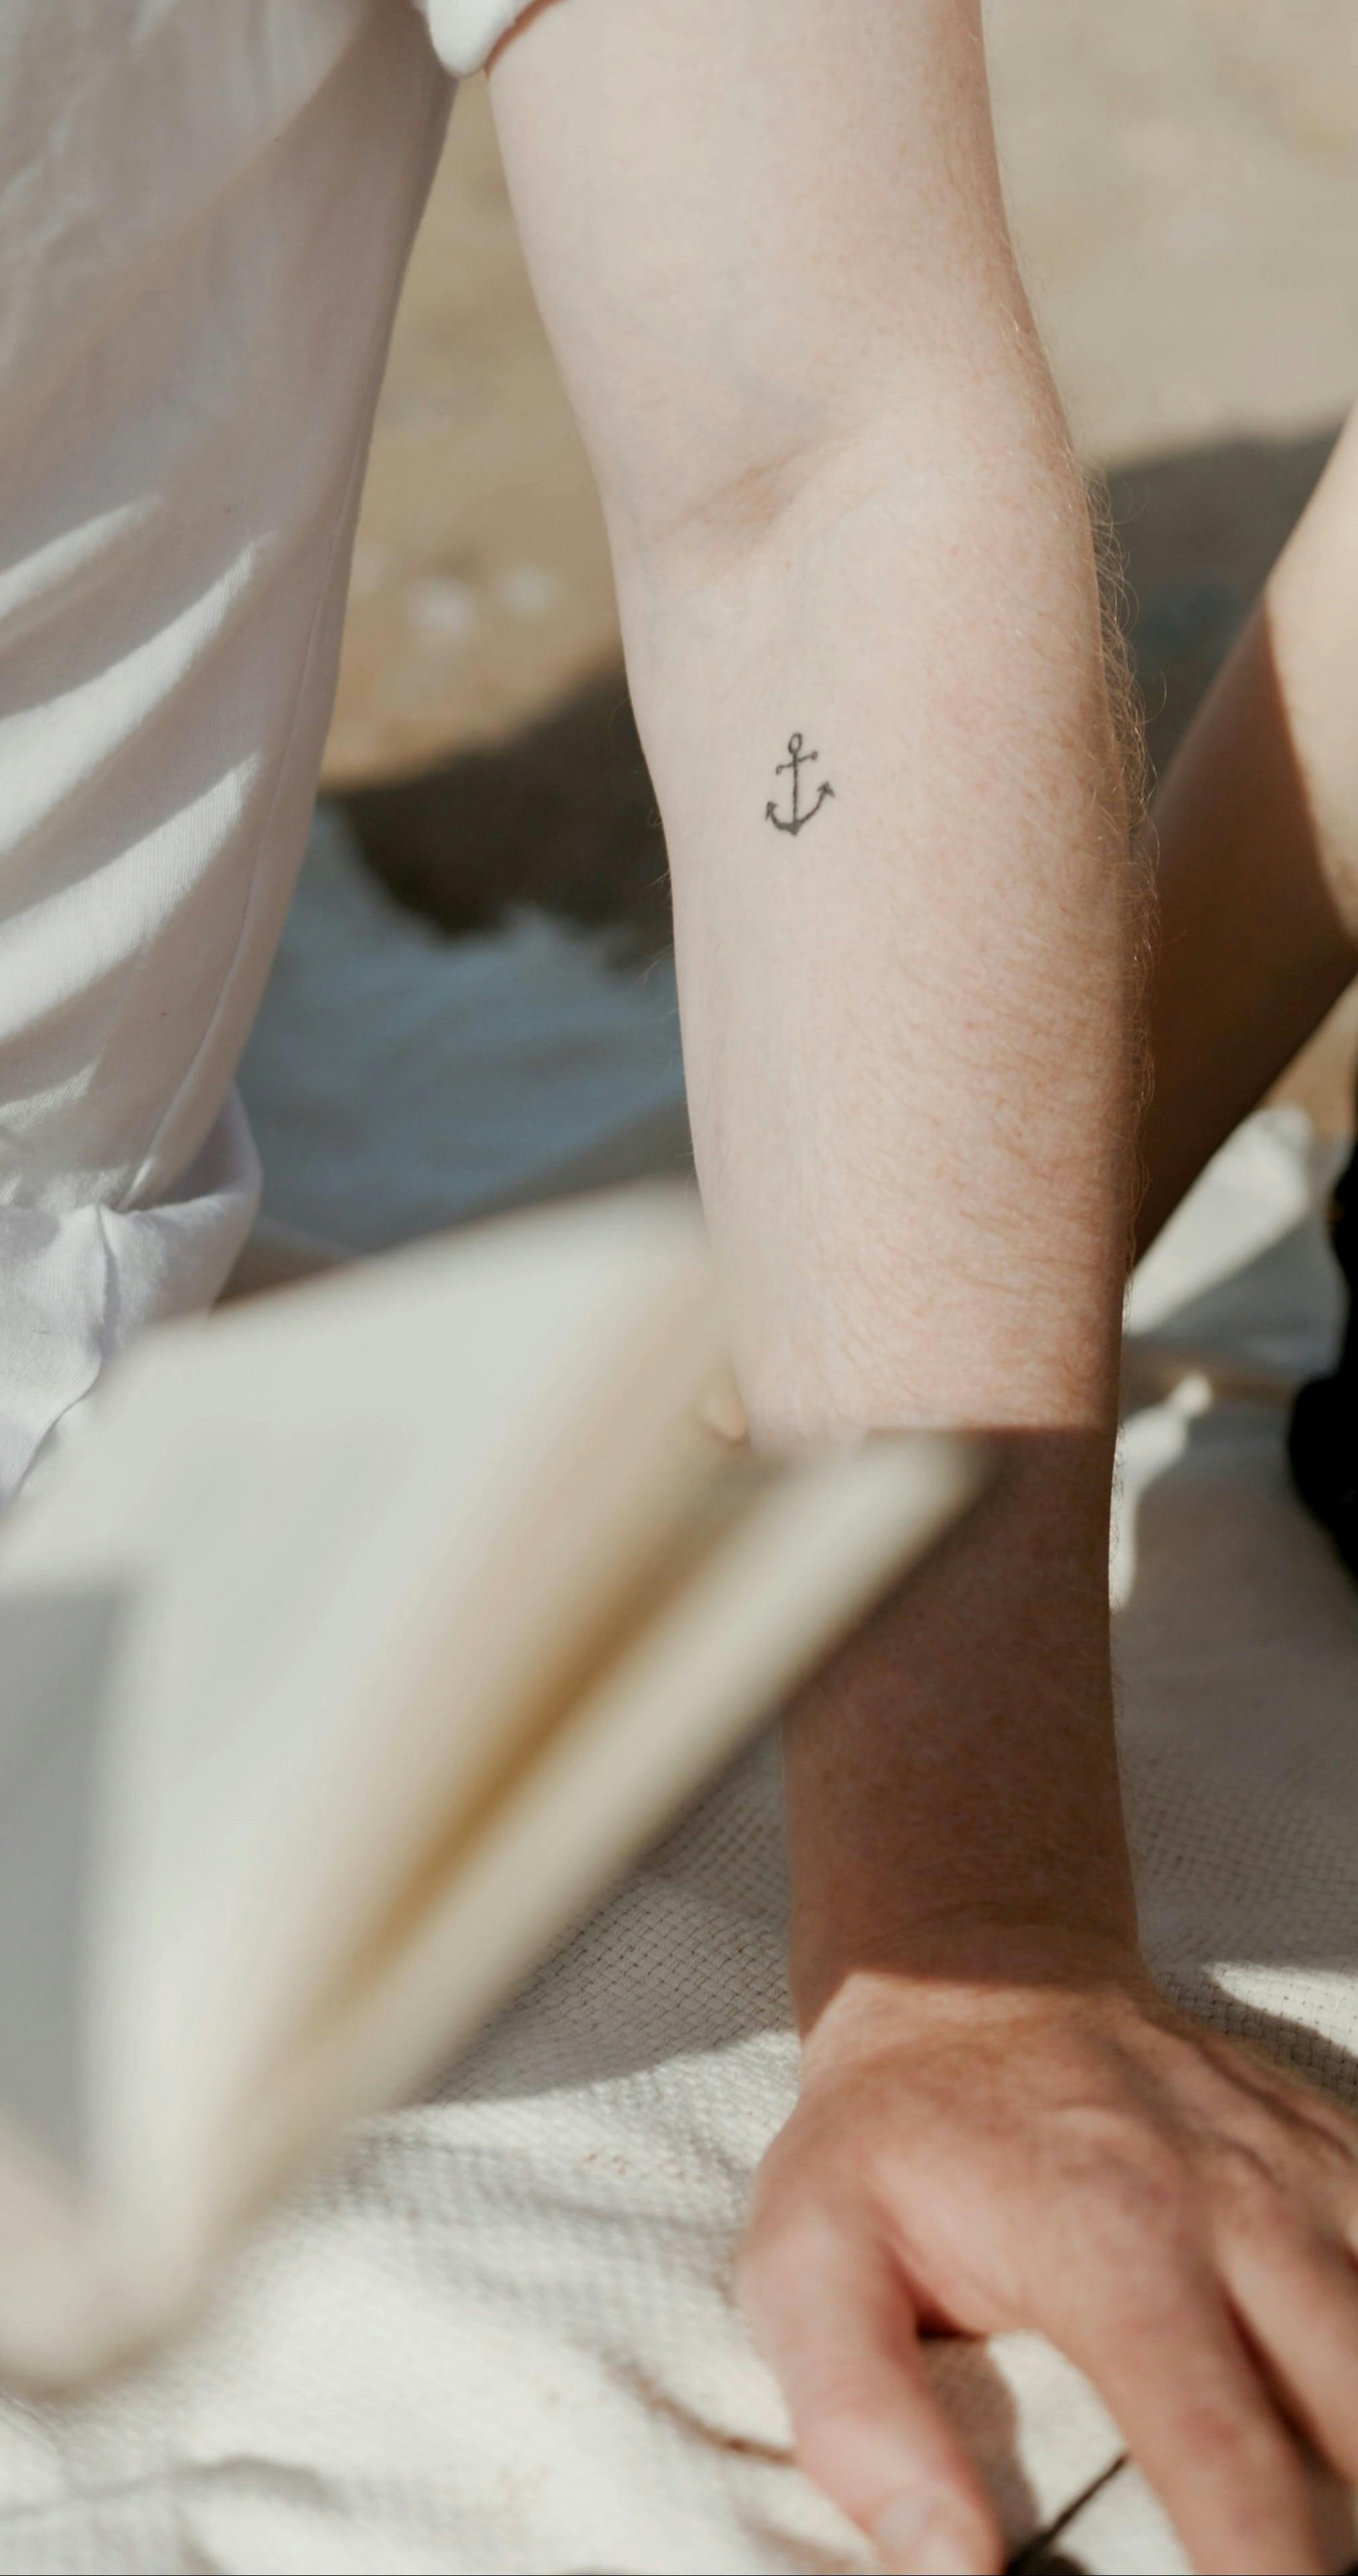 Tattoo uploaded by Ananth • Wrist anchor #anchortattoo #anchor #wristtattoo  #birds #minimaltattoo #minimalistic #minimalist • Tattoodo